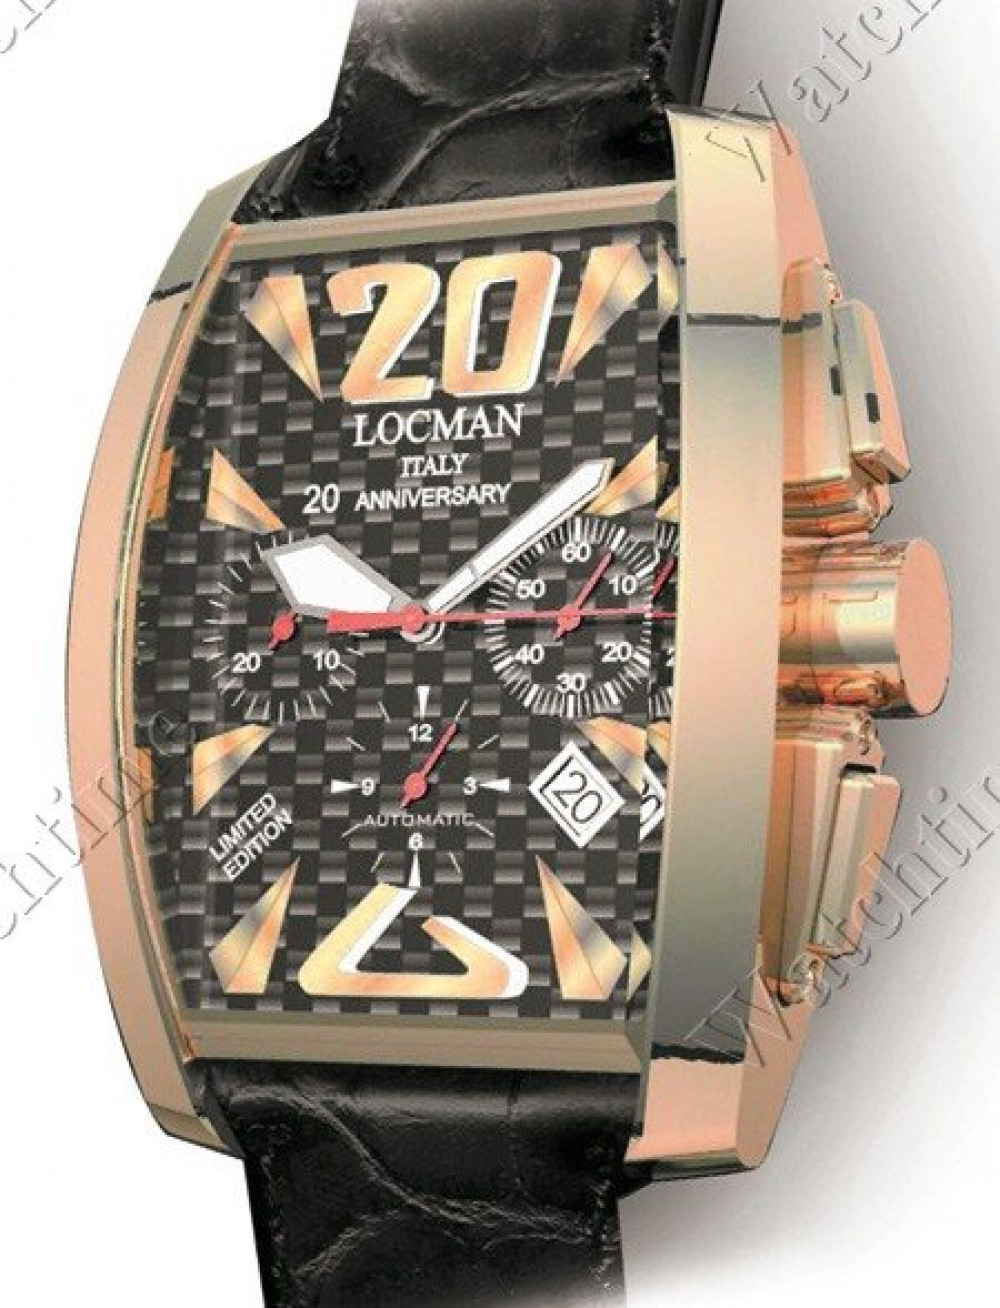 Zegarek firmy Locman, model Panorama 20th Anniversary